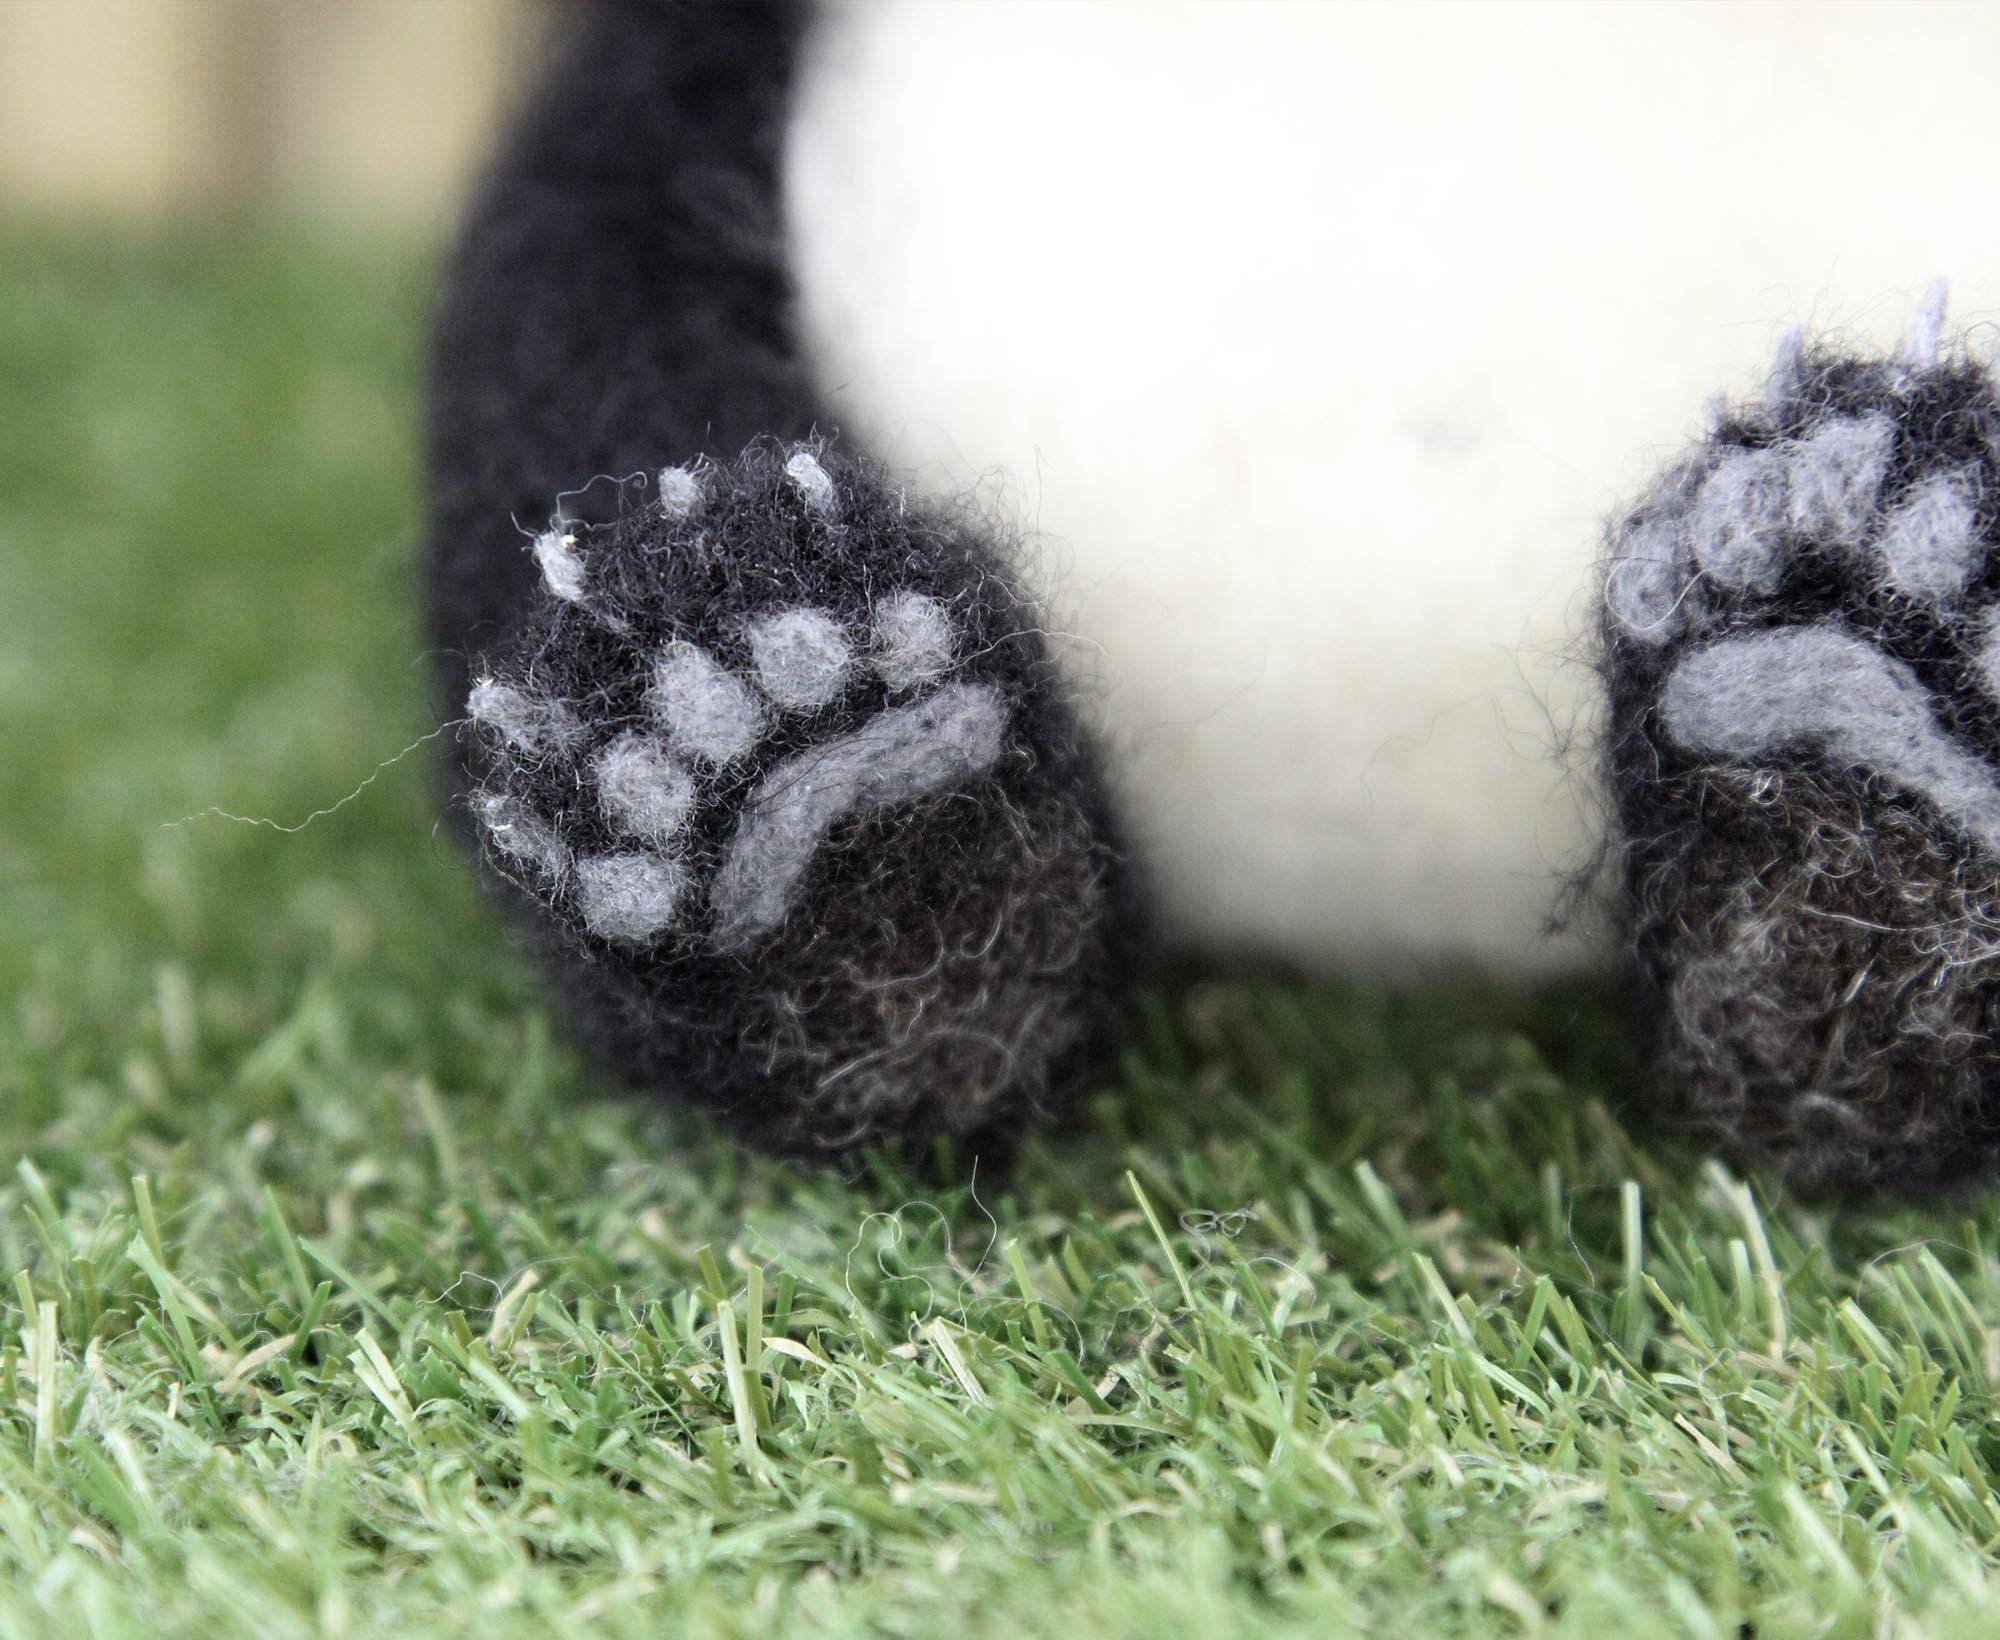 Pepe The Panda  | Needle Felting Kit - World of Wool